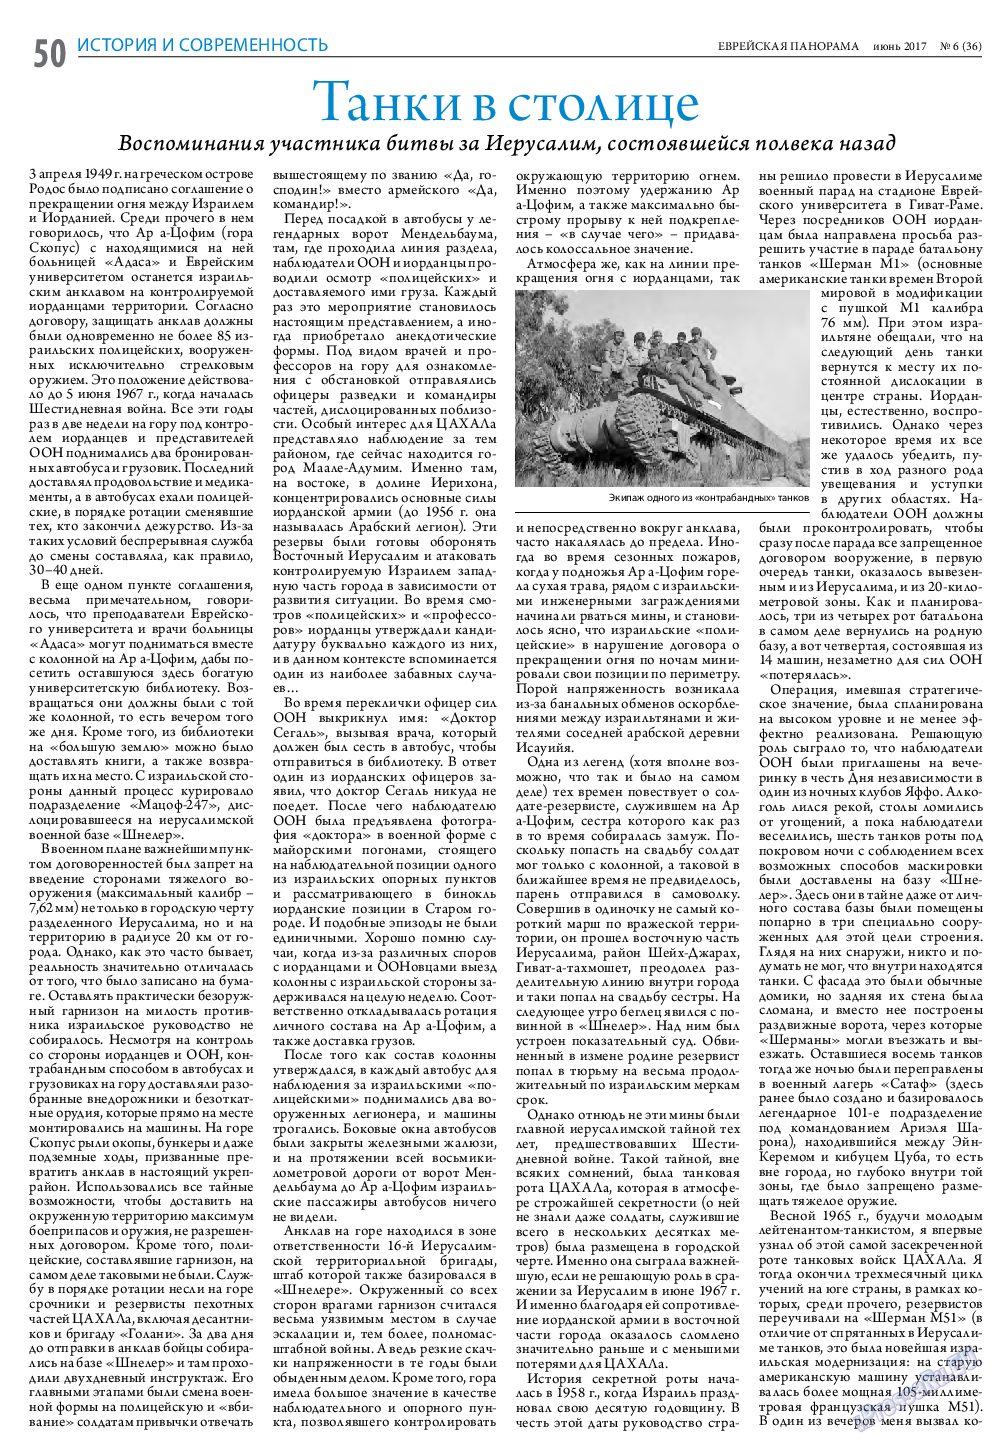 Еврейская панорама, газета. 2017 №6 стр.50